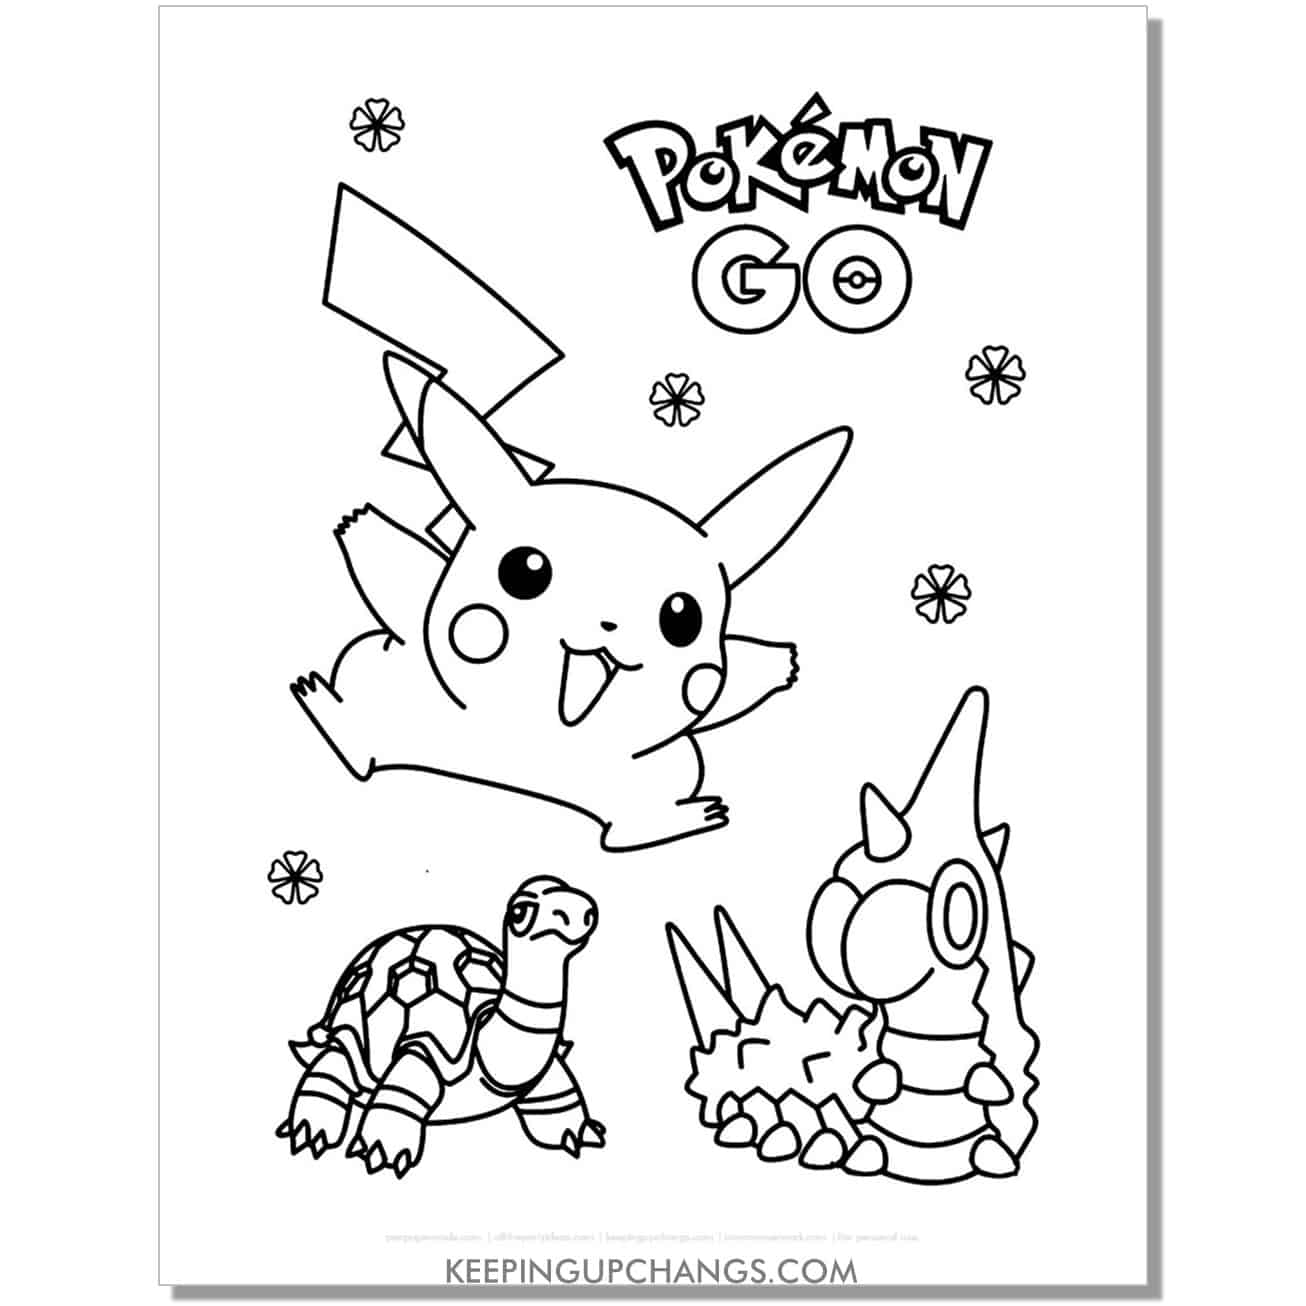 pikachu, torkoal, wurmple pokemon go coloring page, sheet.